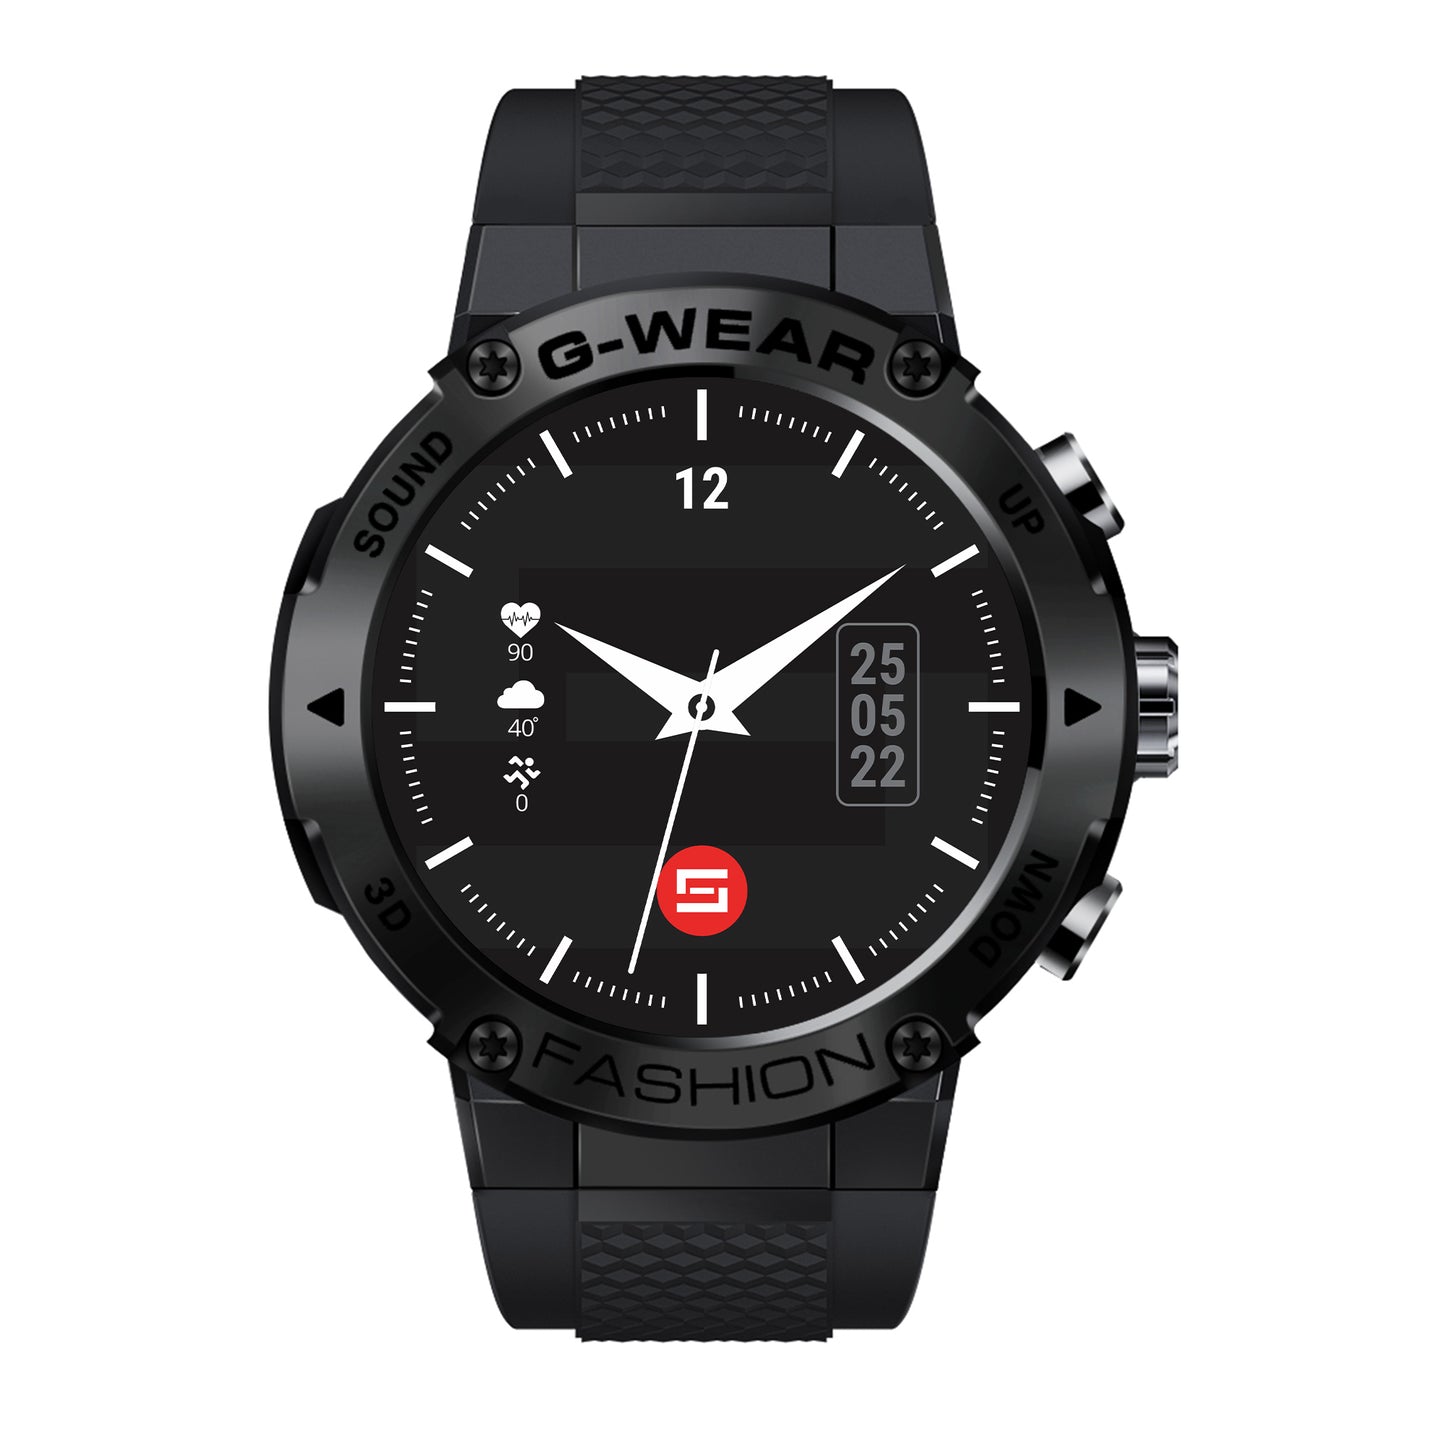 G-WEAR+ Fashion Smart Watch